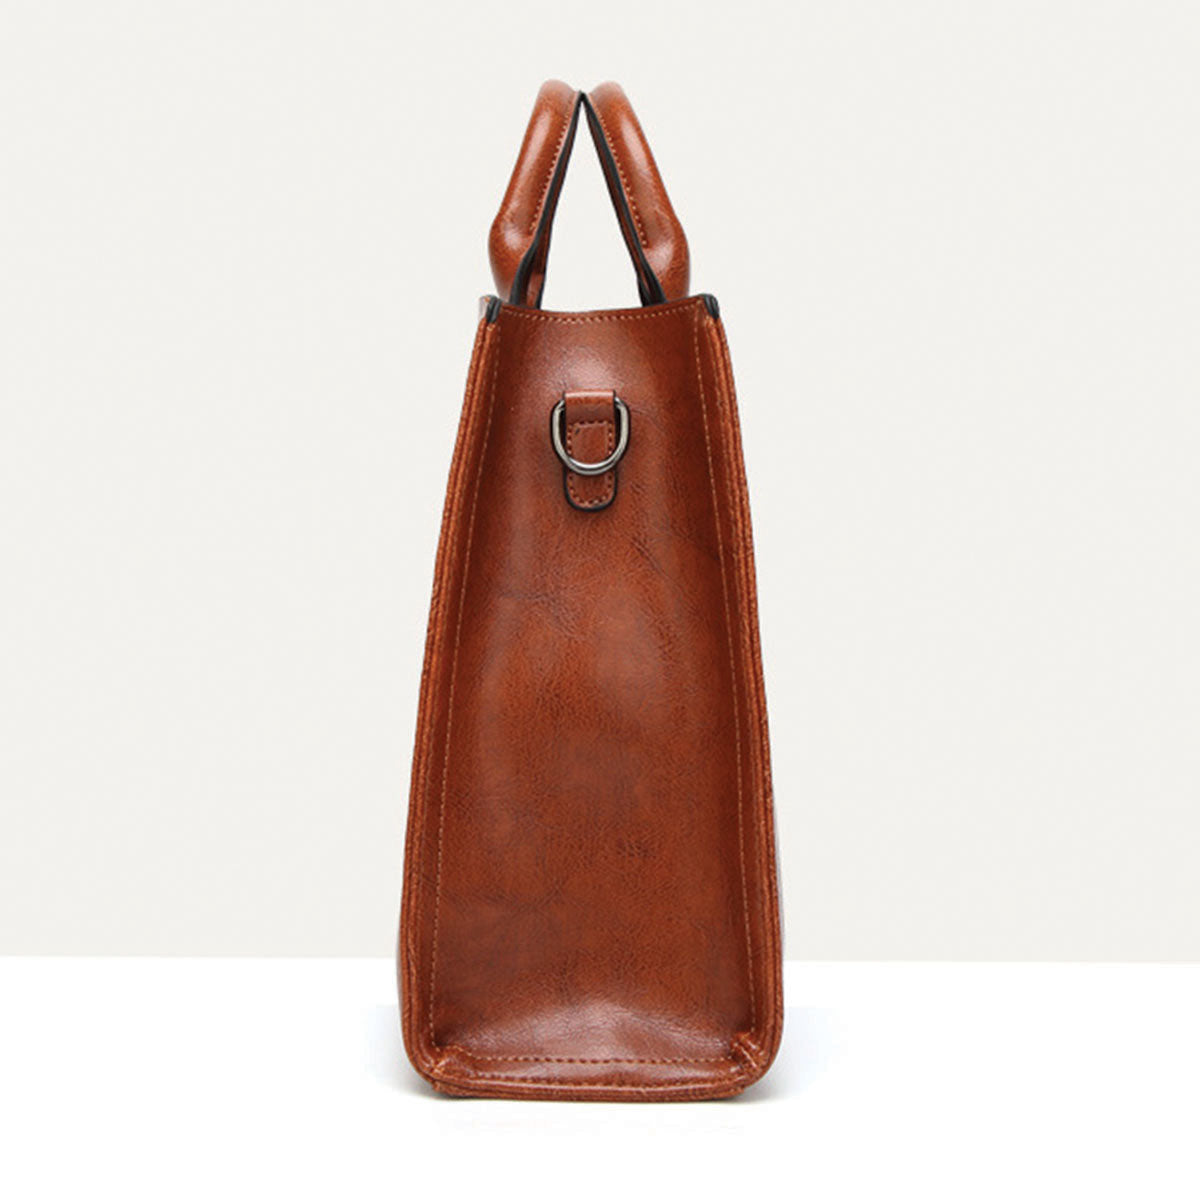 Your Best Companion - Bullmastiff Luxury Handbag V1